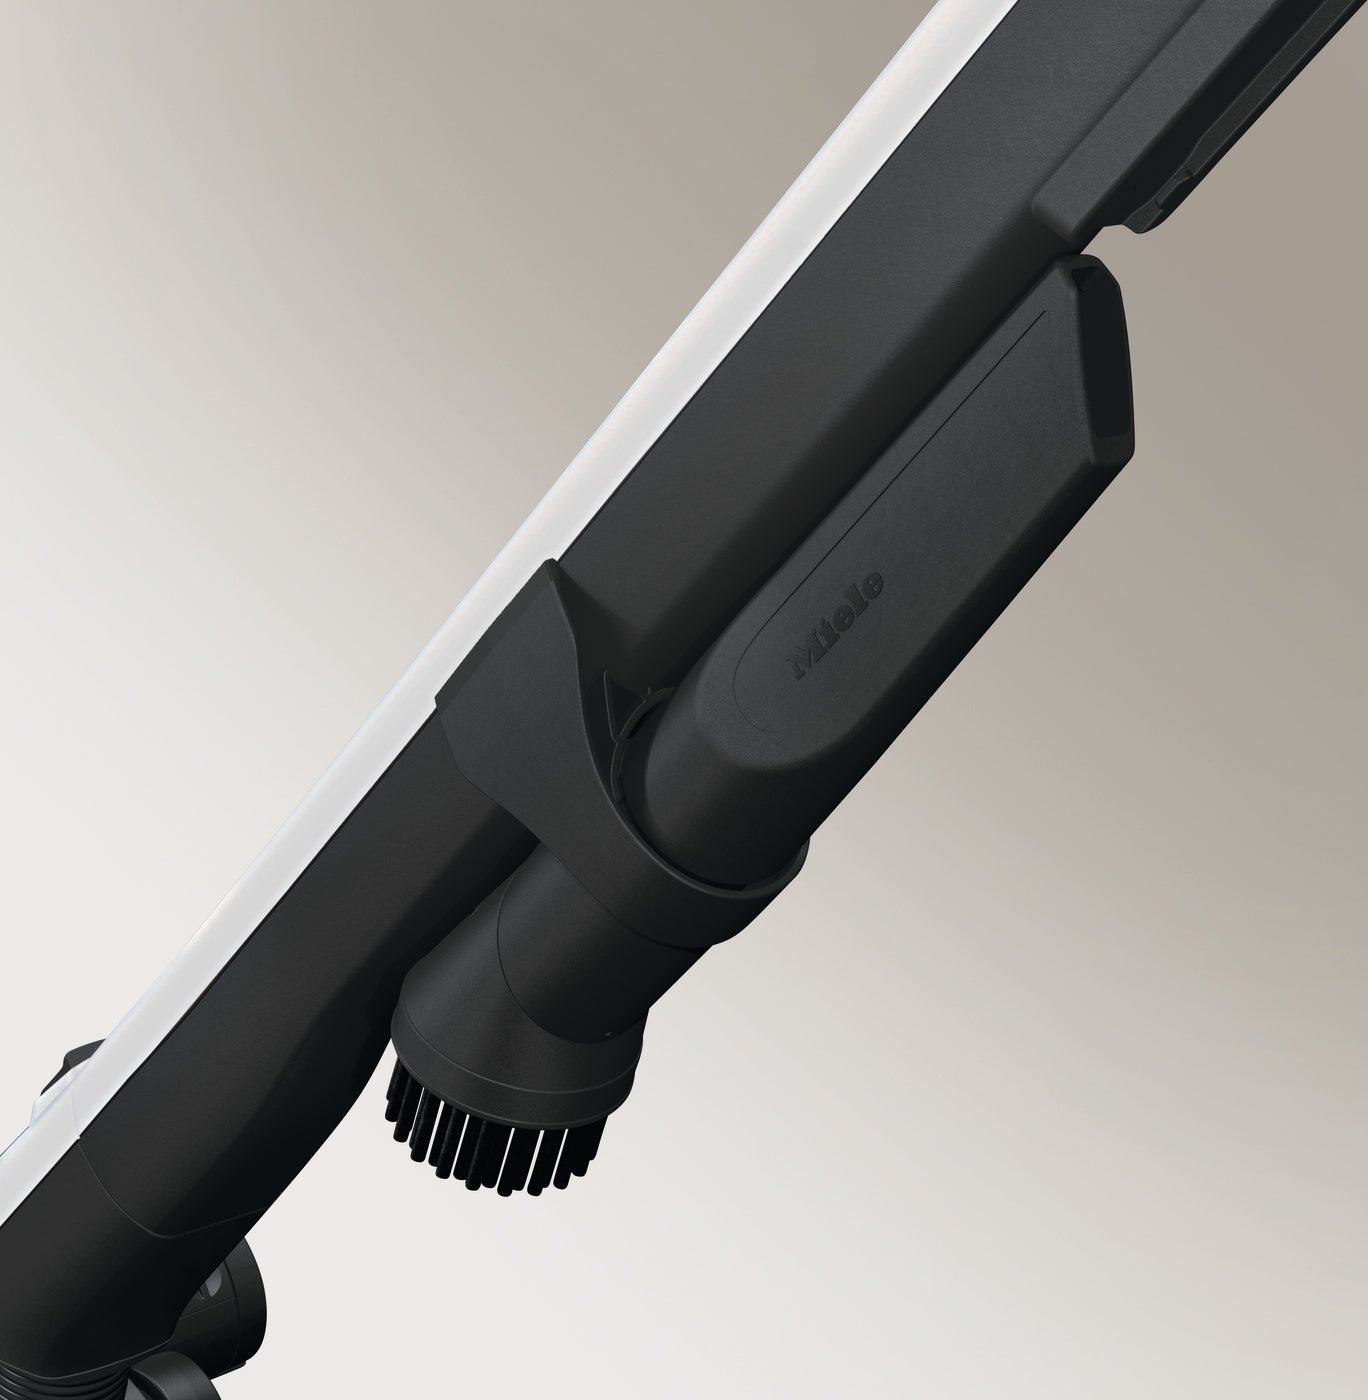 Miele Triflex HX2 Cordless Vacuums 